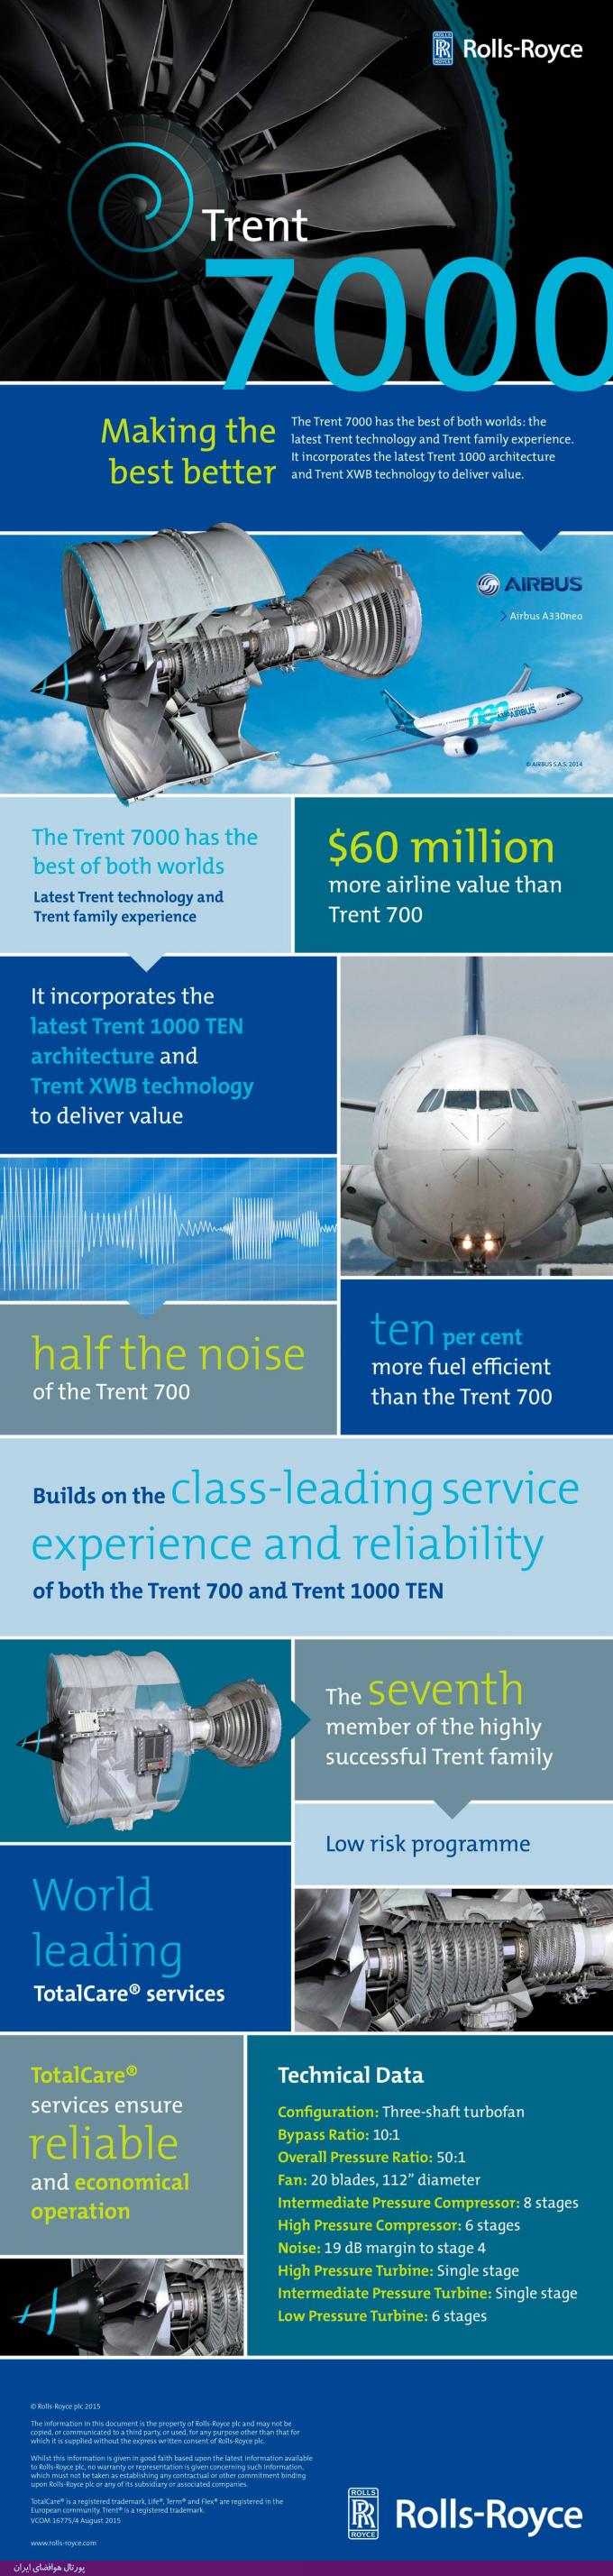 مشخصات موتور رولز رویس ترنت 7000، موتور جت اختصاصی هواپیمای ایرباس A330neo (+ اینفوگرافیک)